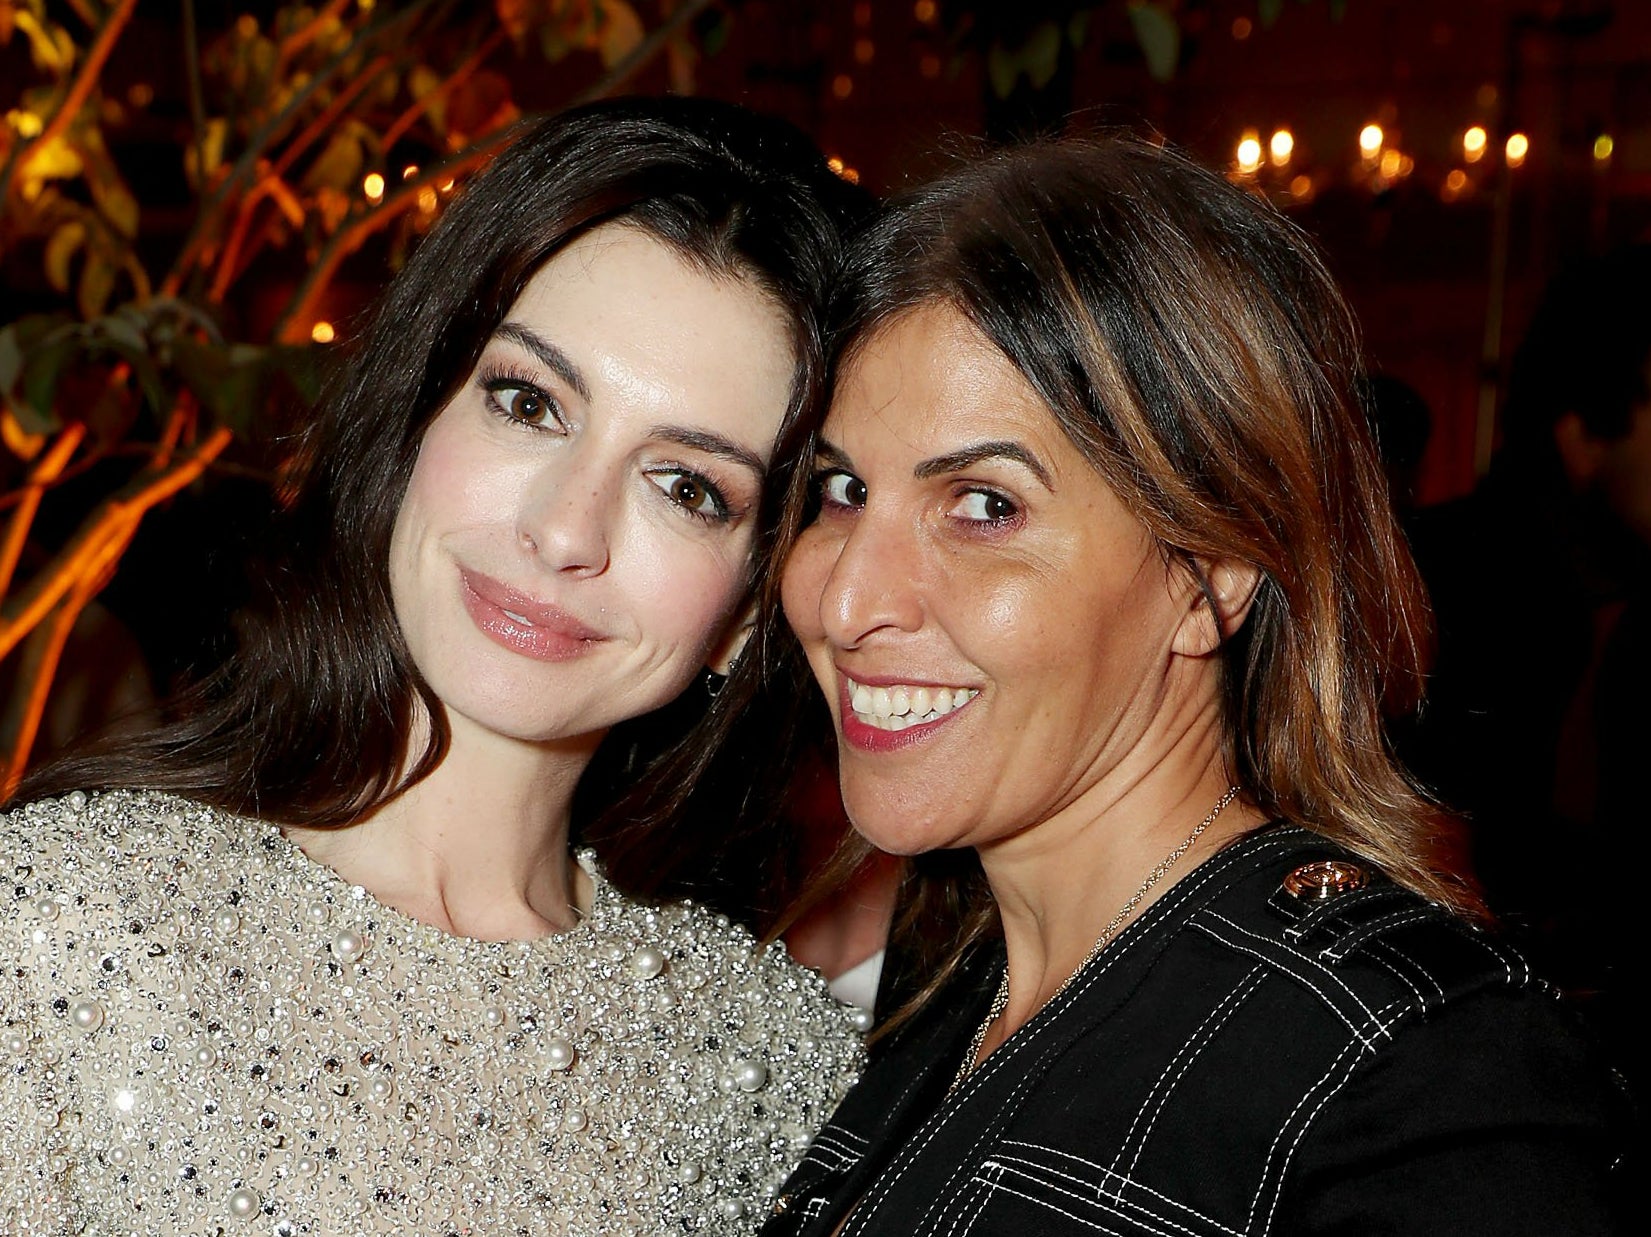 Dakhil with Anne Hathaway last year